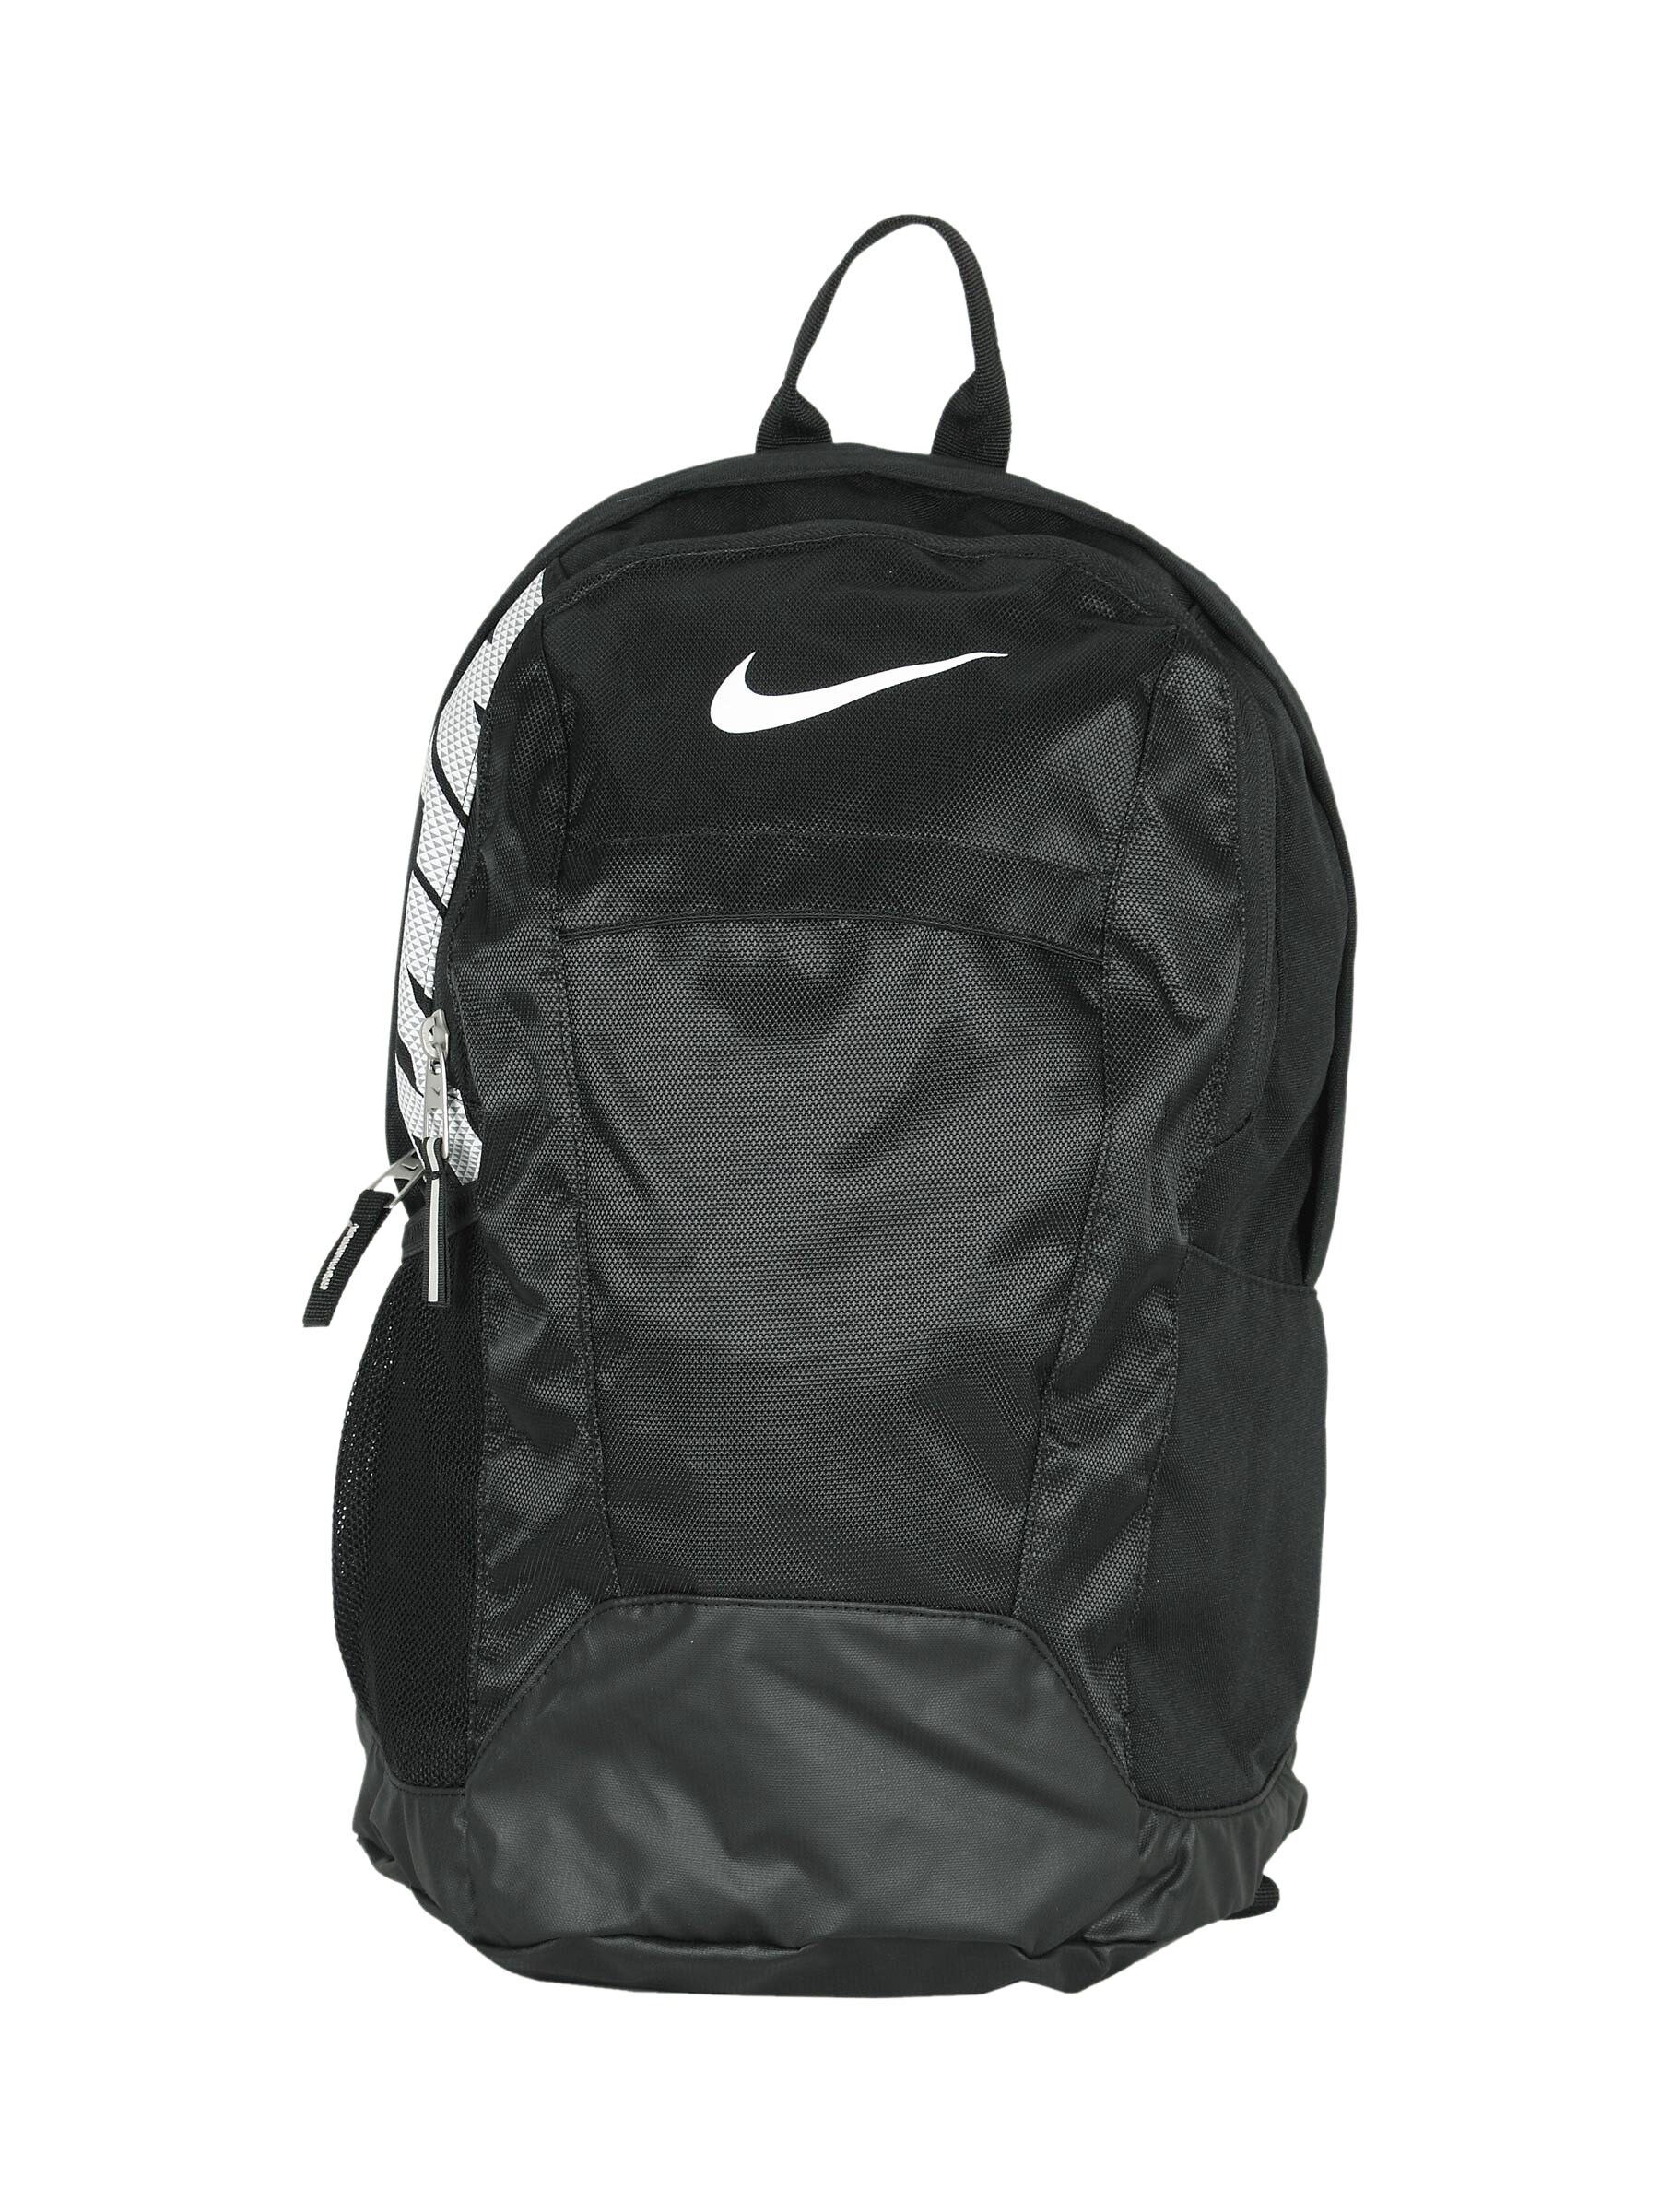 Nike Unisex Team Training Black Backpack